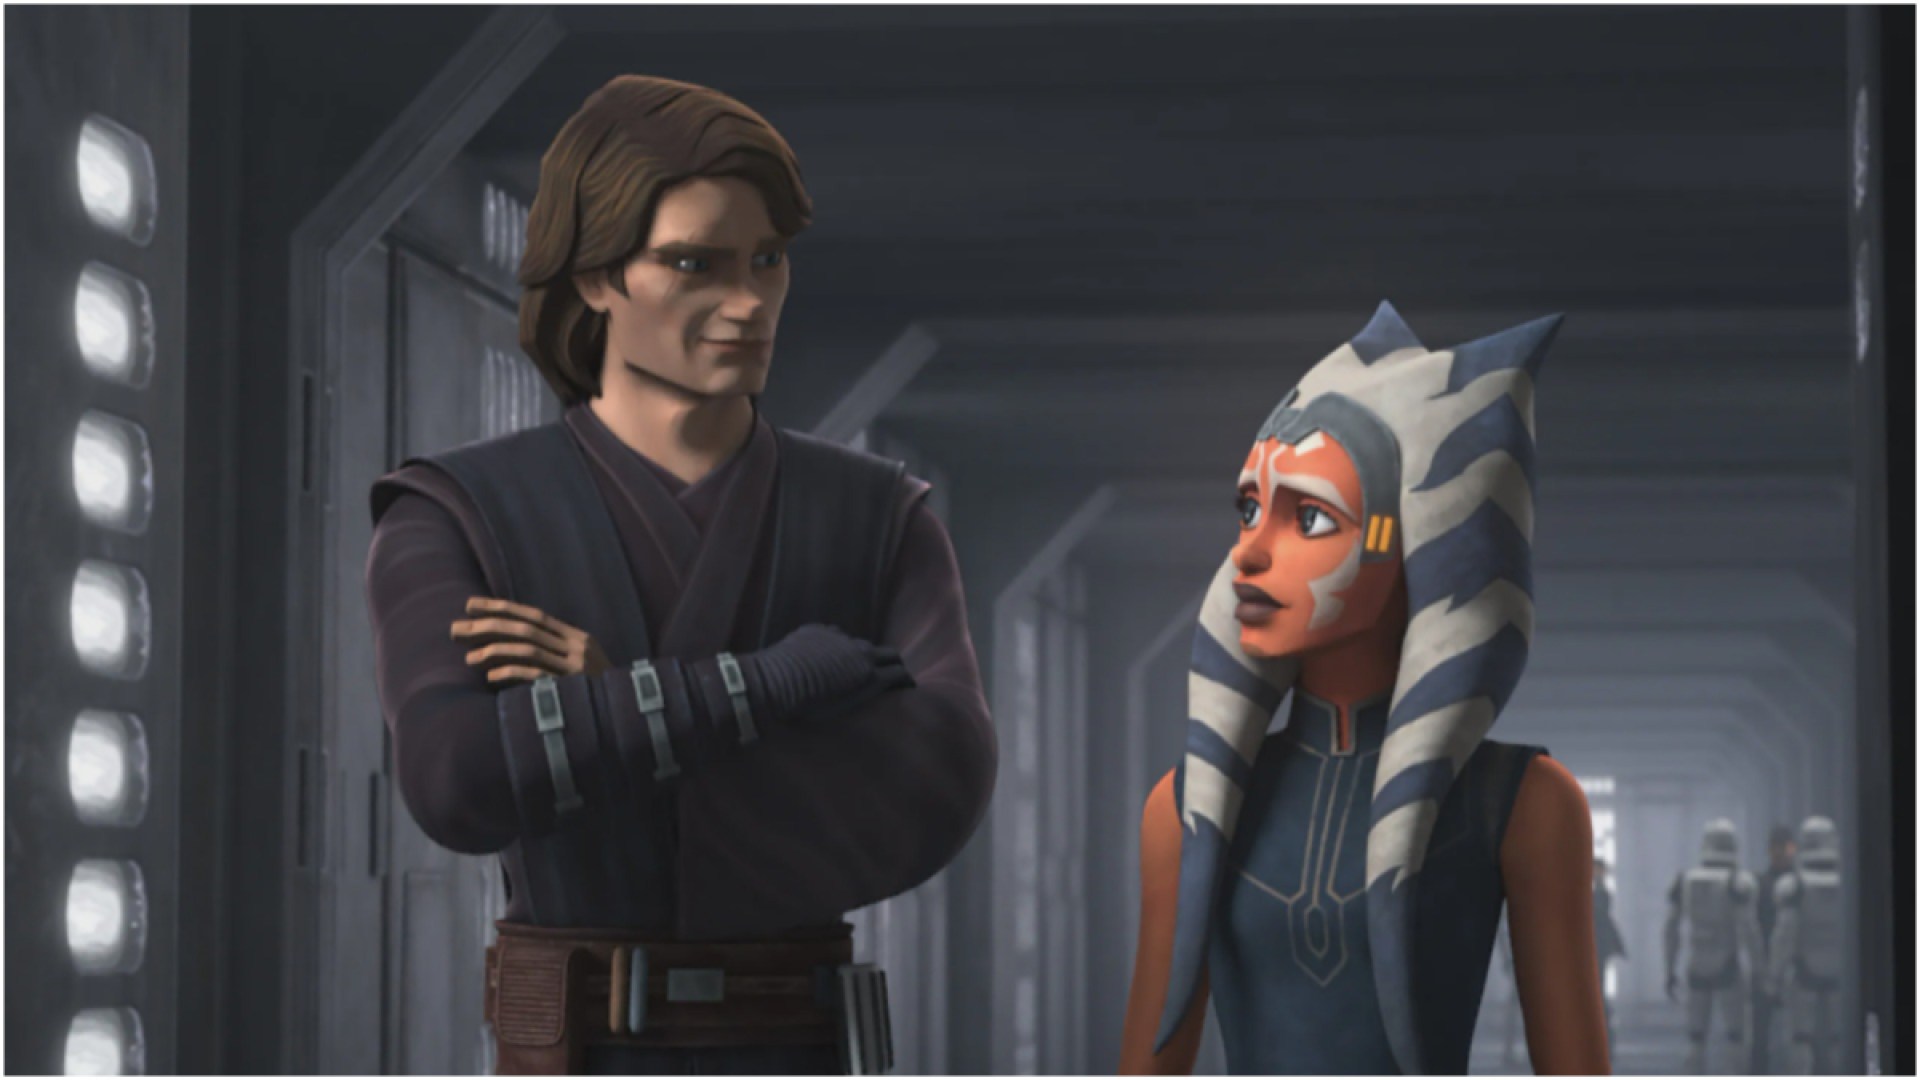 Anakin and Ahsoka in 'The Clone Wars'